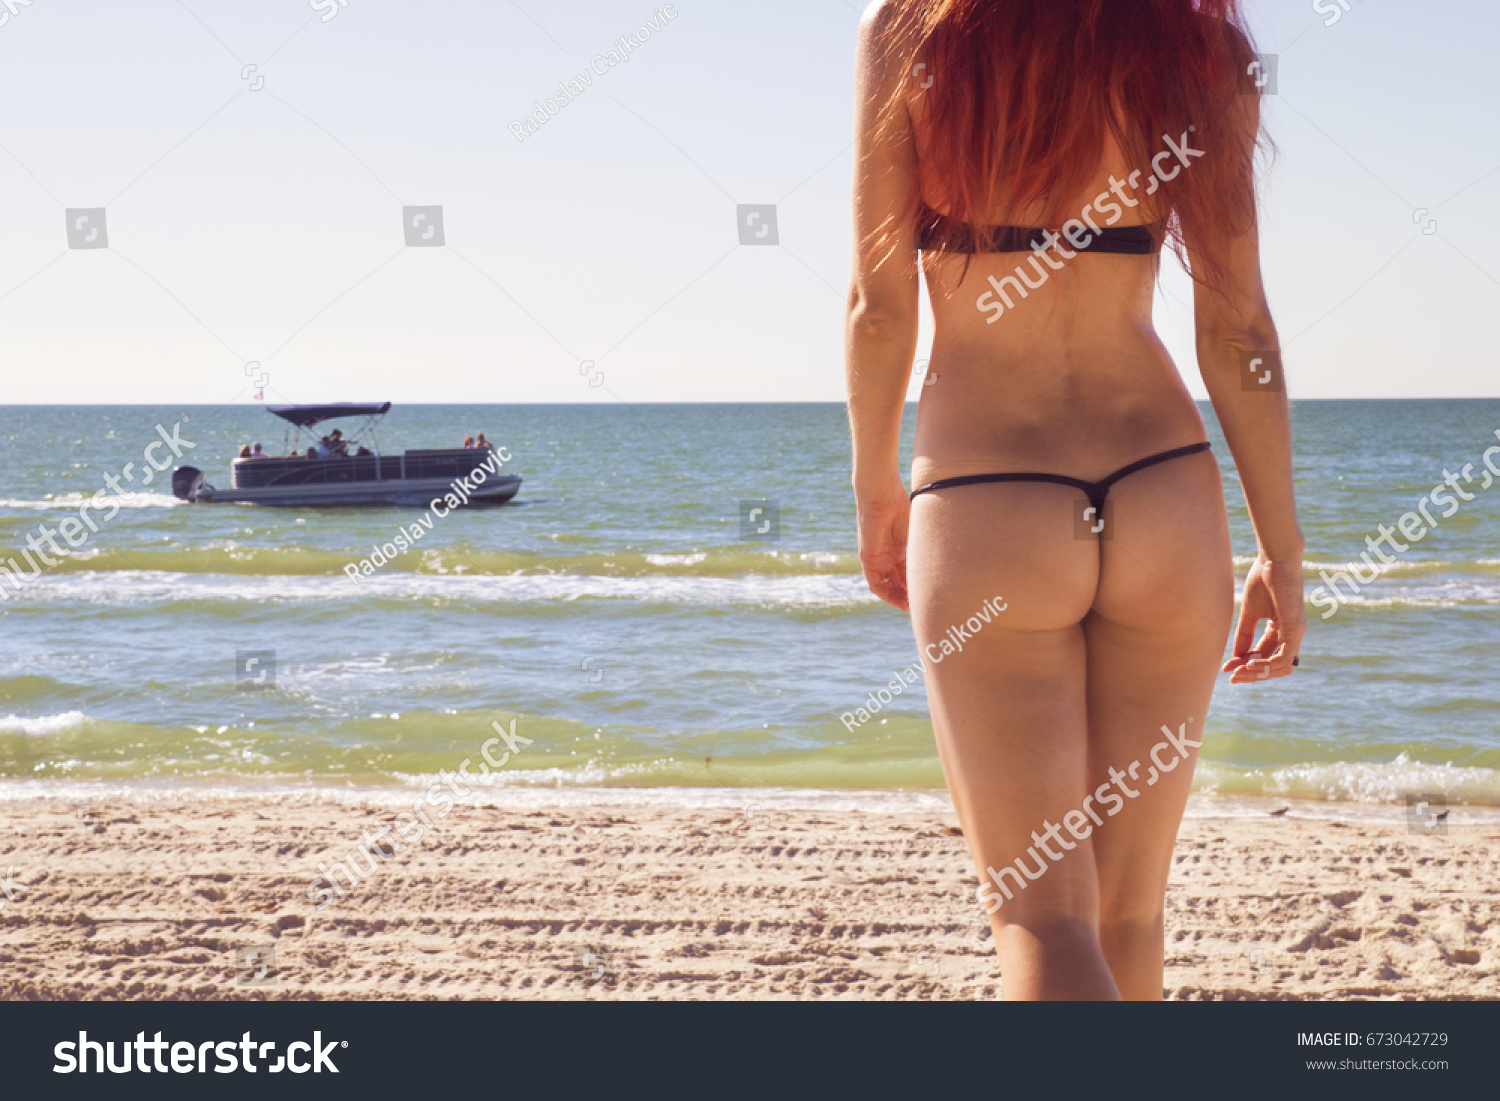 Hot girls in gstring on beach Thong Bikini Beach Girl Sexy Bum Stock Photo Edit Now 673042729